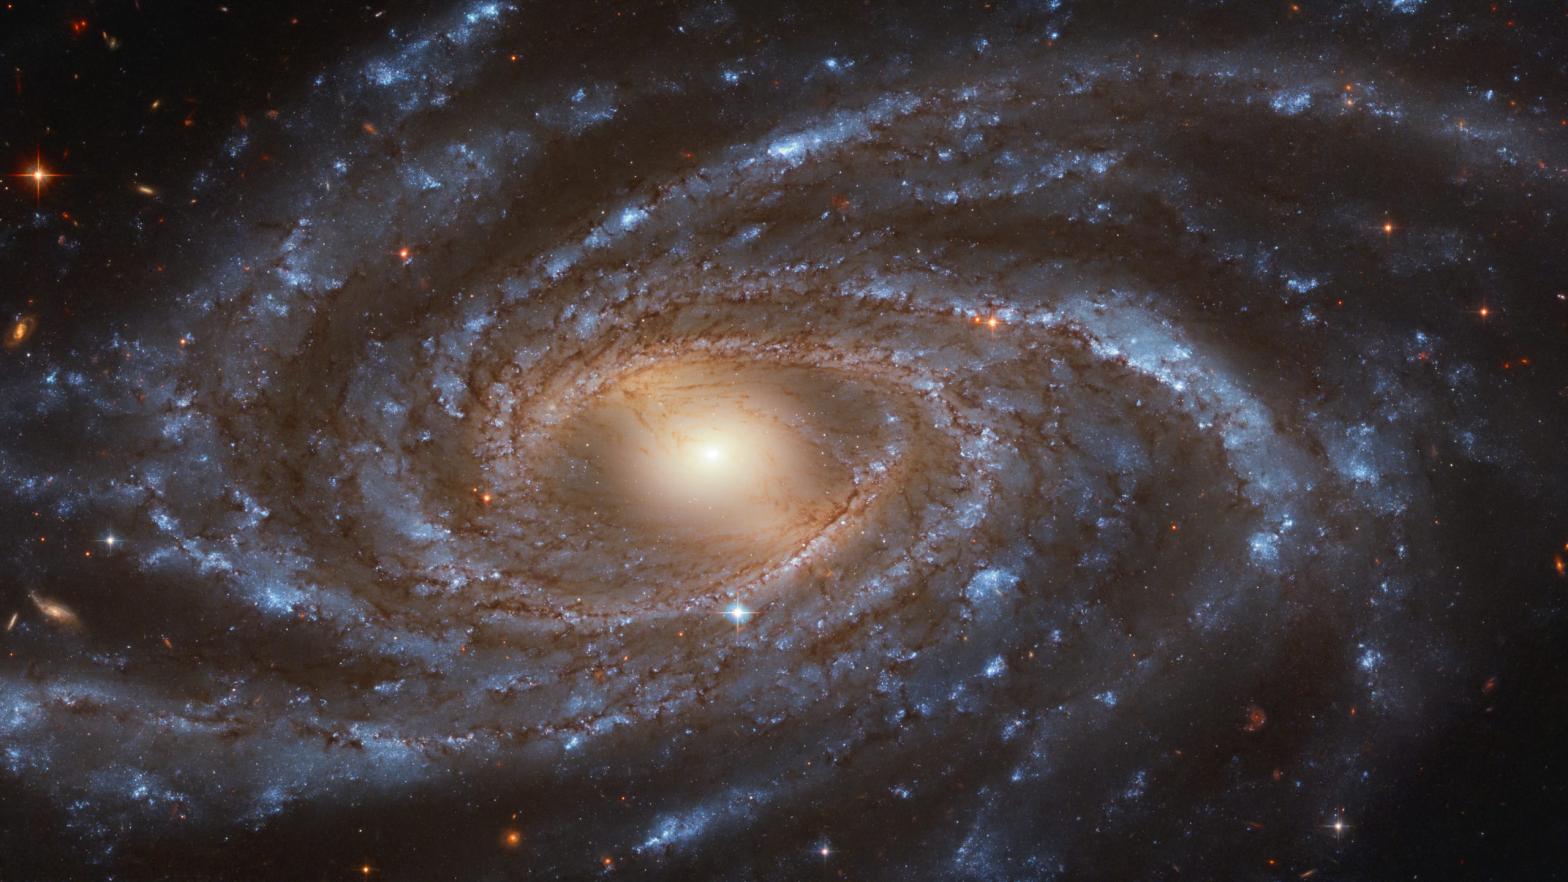 Spiral galaxy NGC 2336. (Image: ESA/Hubble & NASA, V. Antoniou; Acknowledgment: Judy Schmidt)